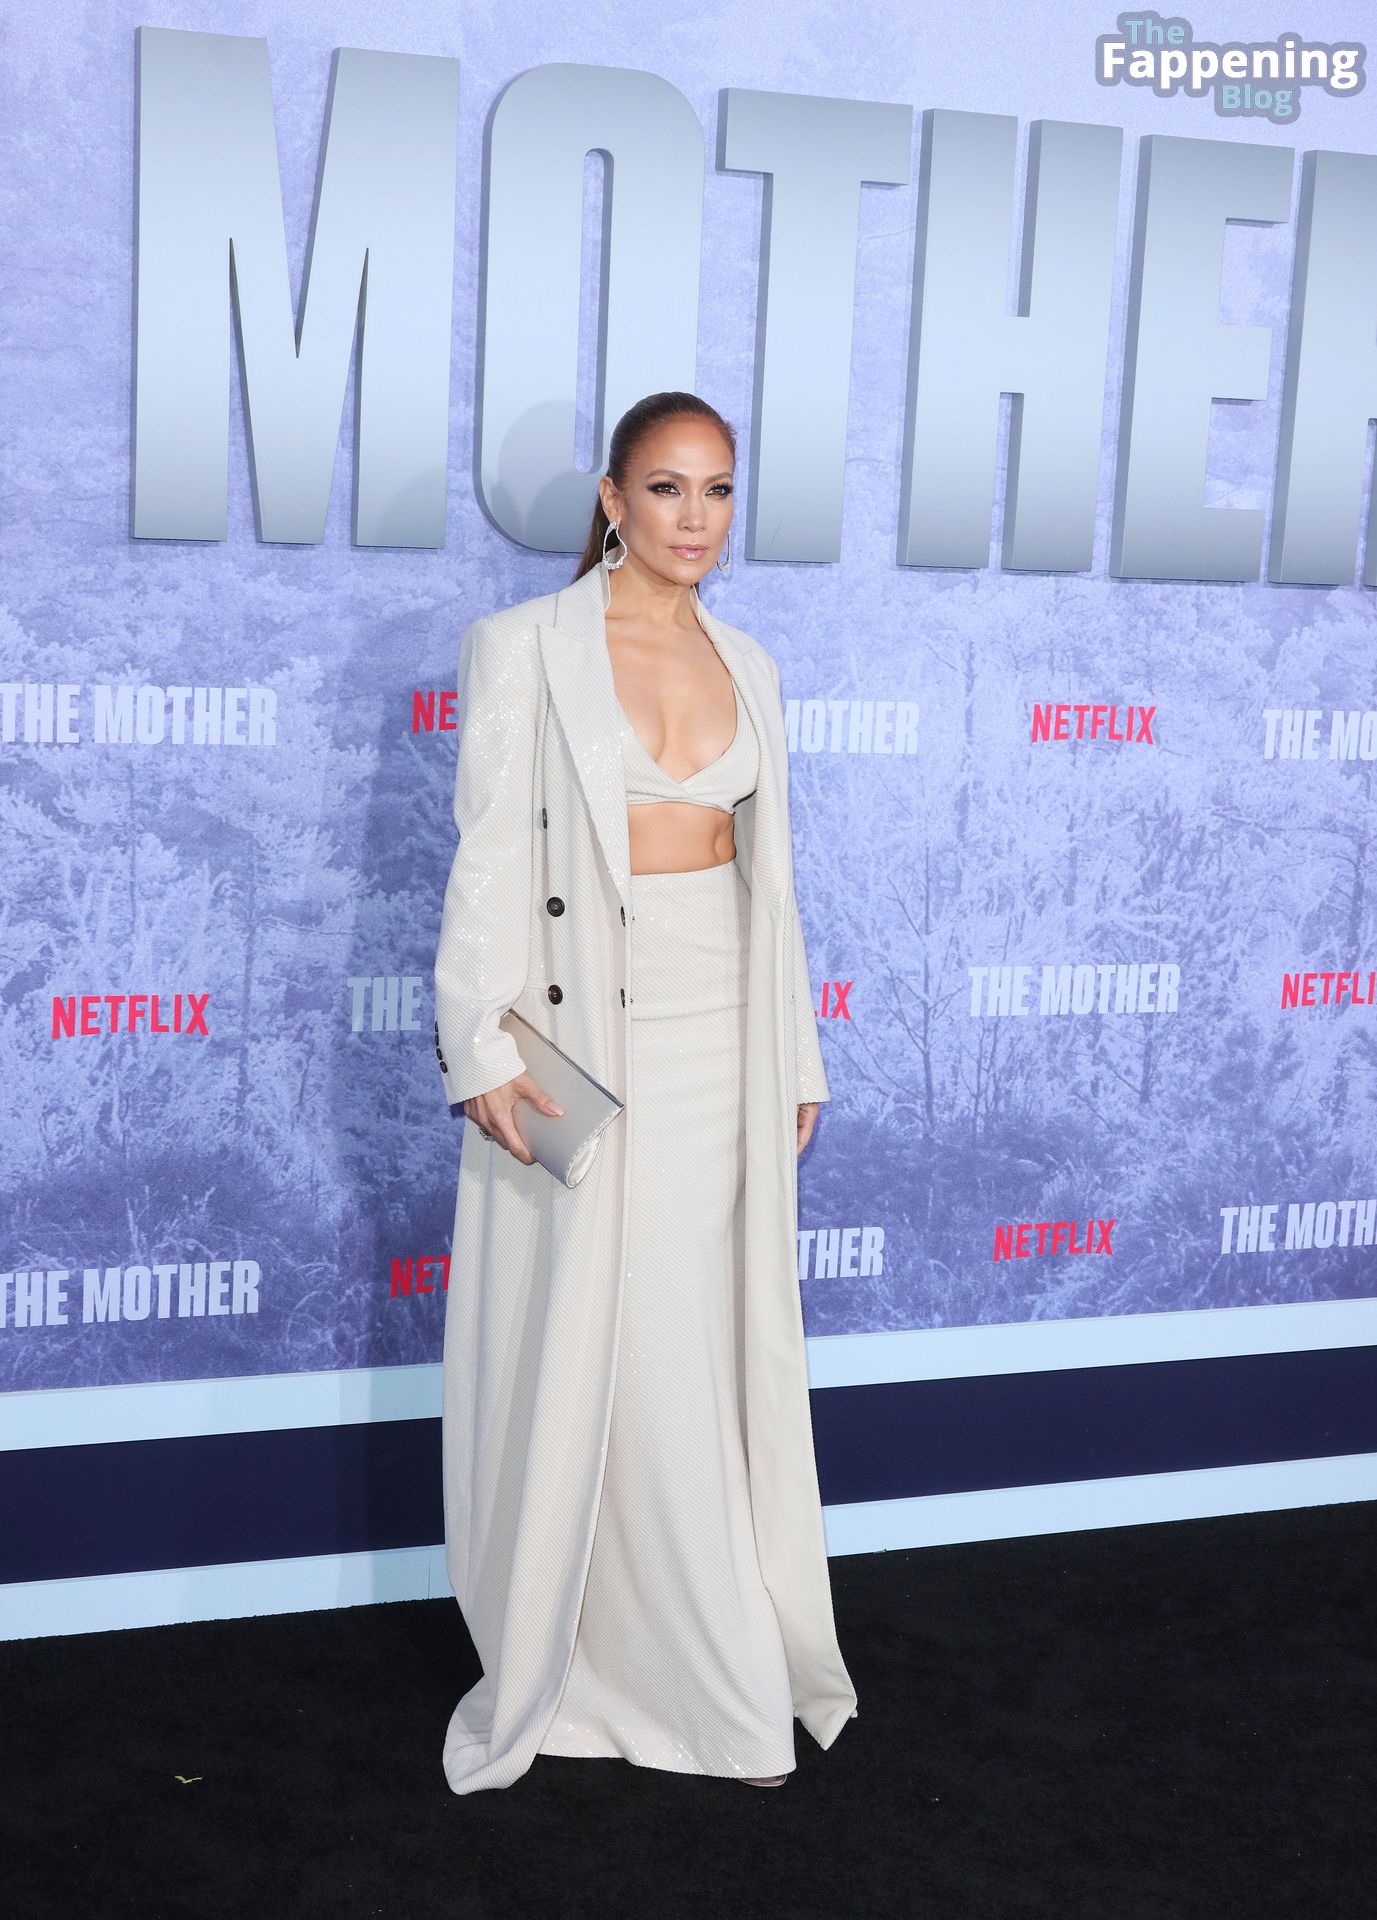 Jennifer-Lopez-Sexy-The-Fappening-Blog-8-1.jpg